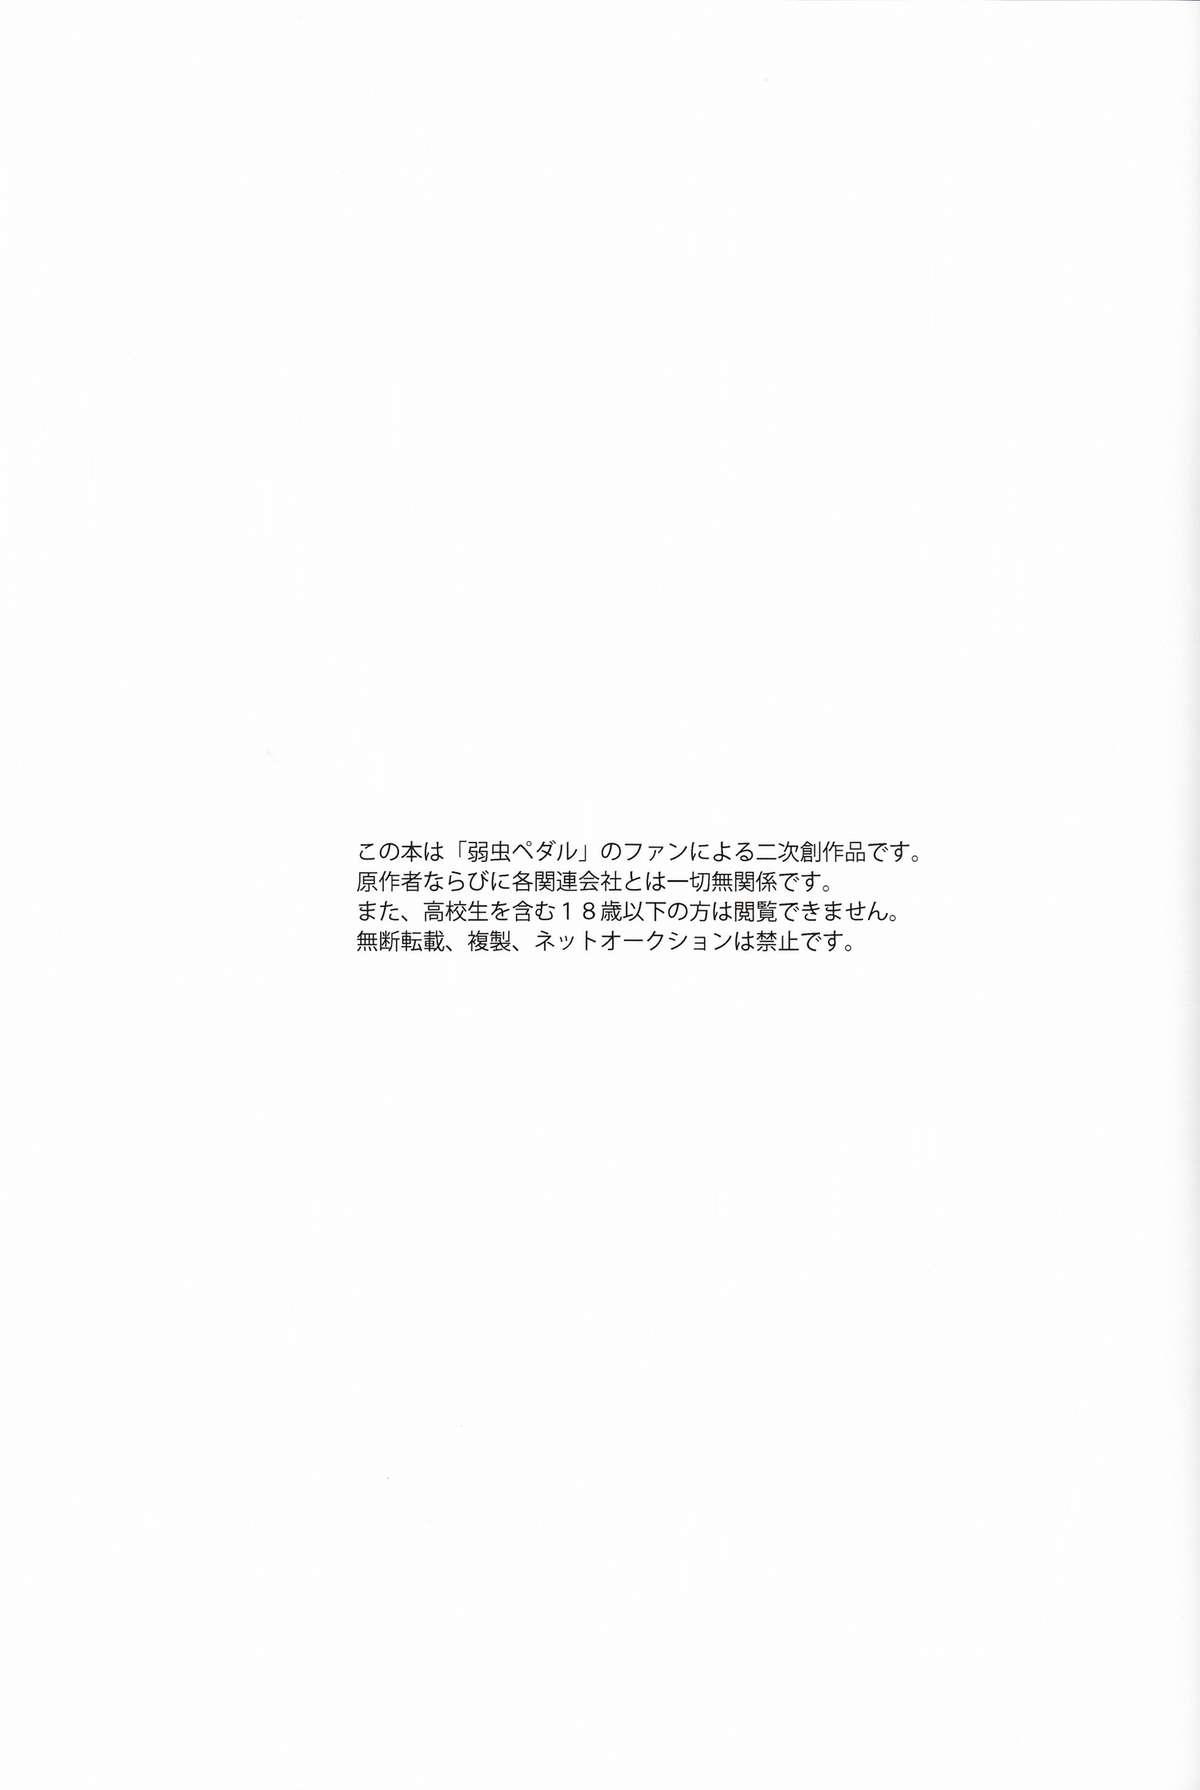 Webcam Kare Ni Onetsu - Yowamushi pedal Office - Page 3